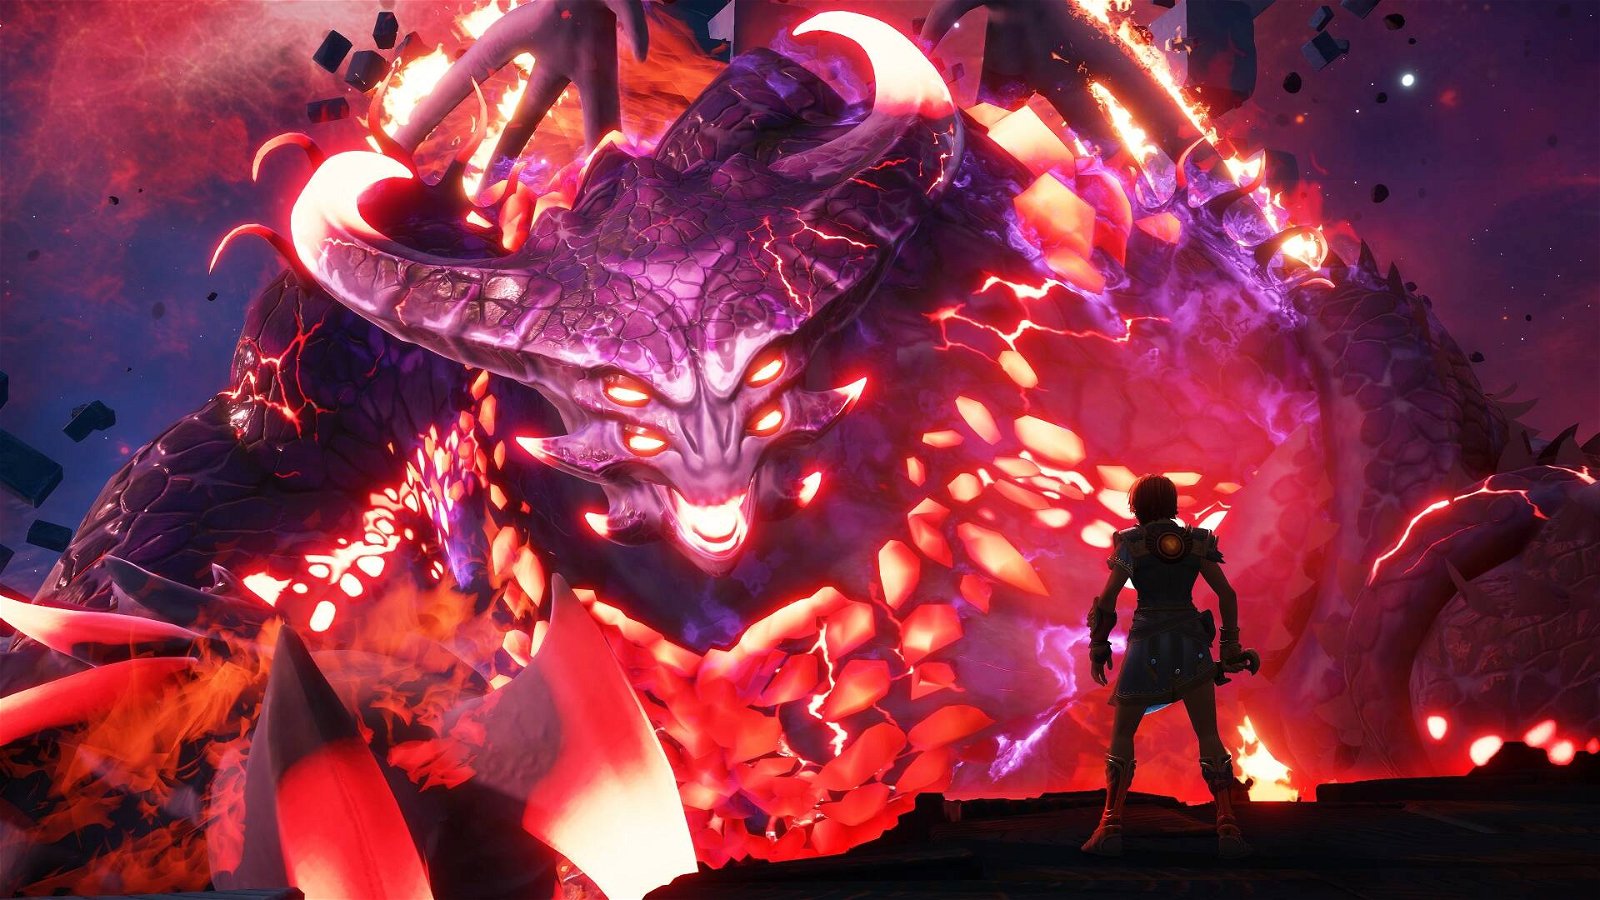 Immagine di Immortals Fenyx Rising esiste per un bug, Ubisoft conferma